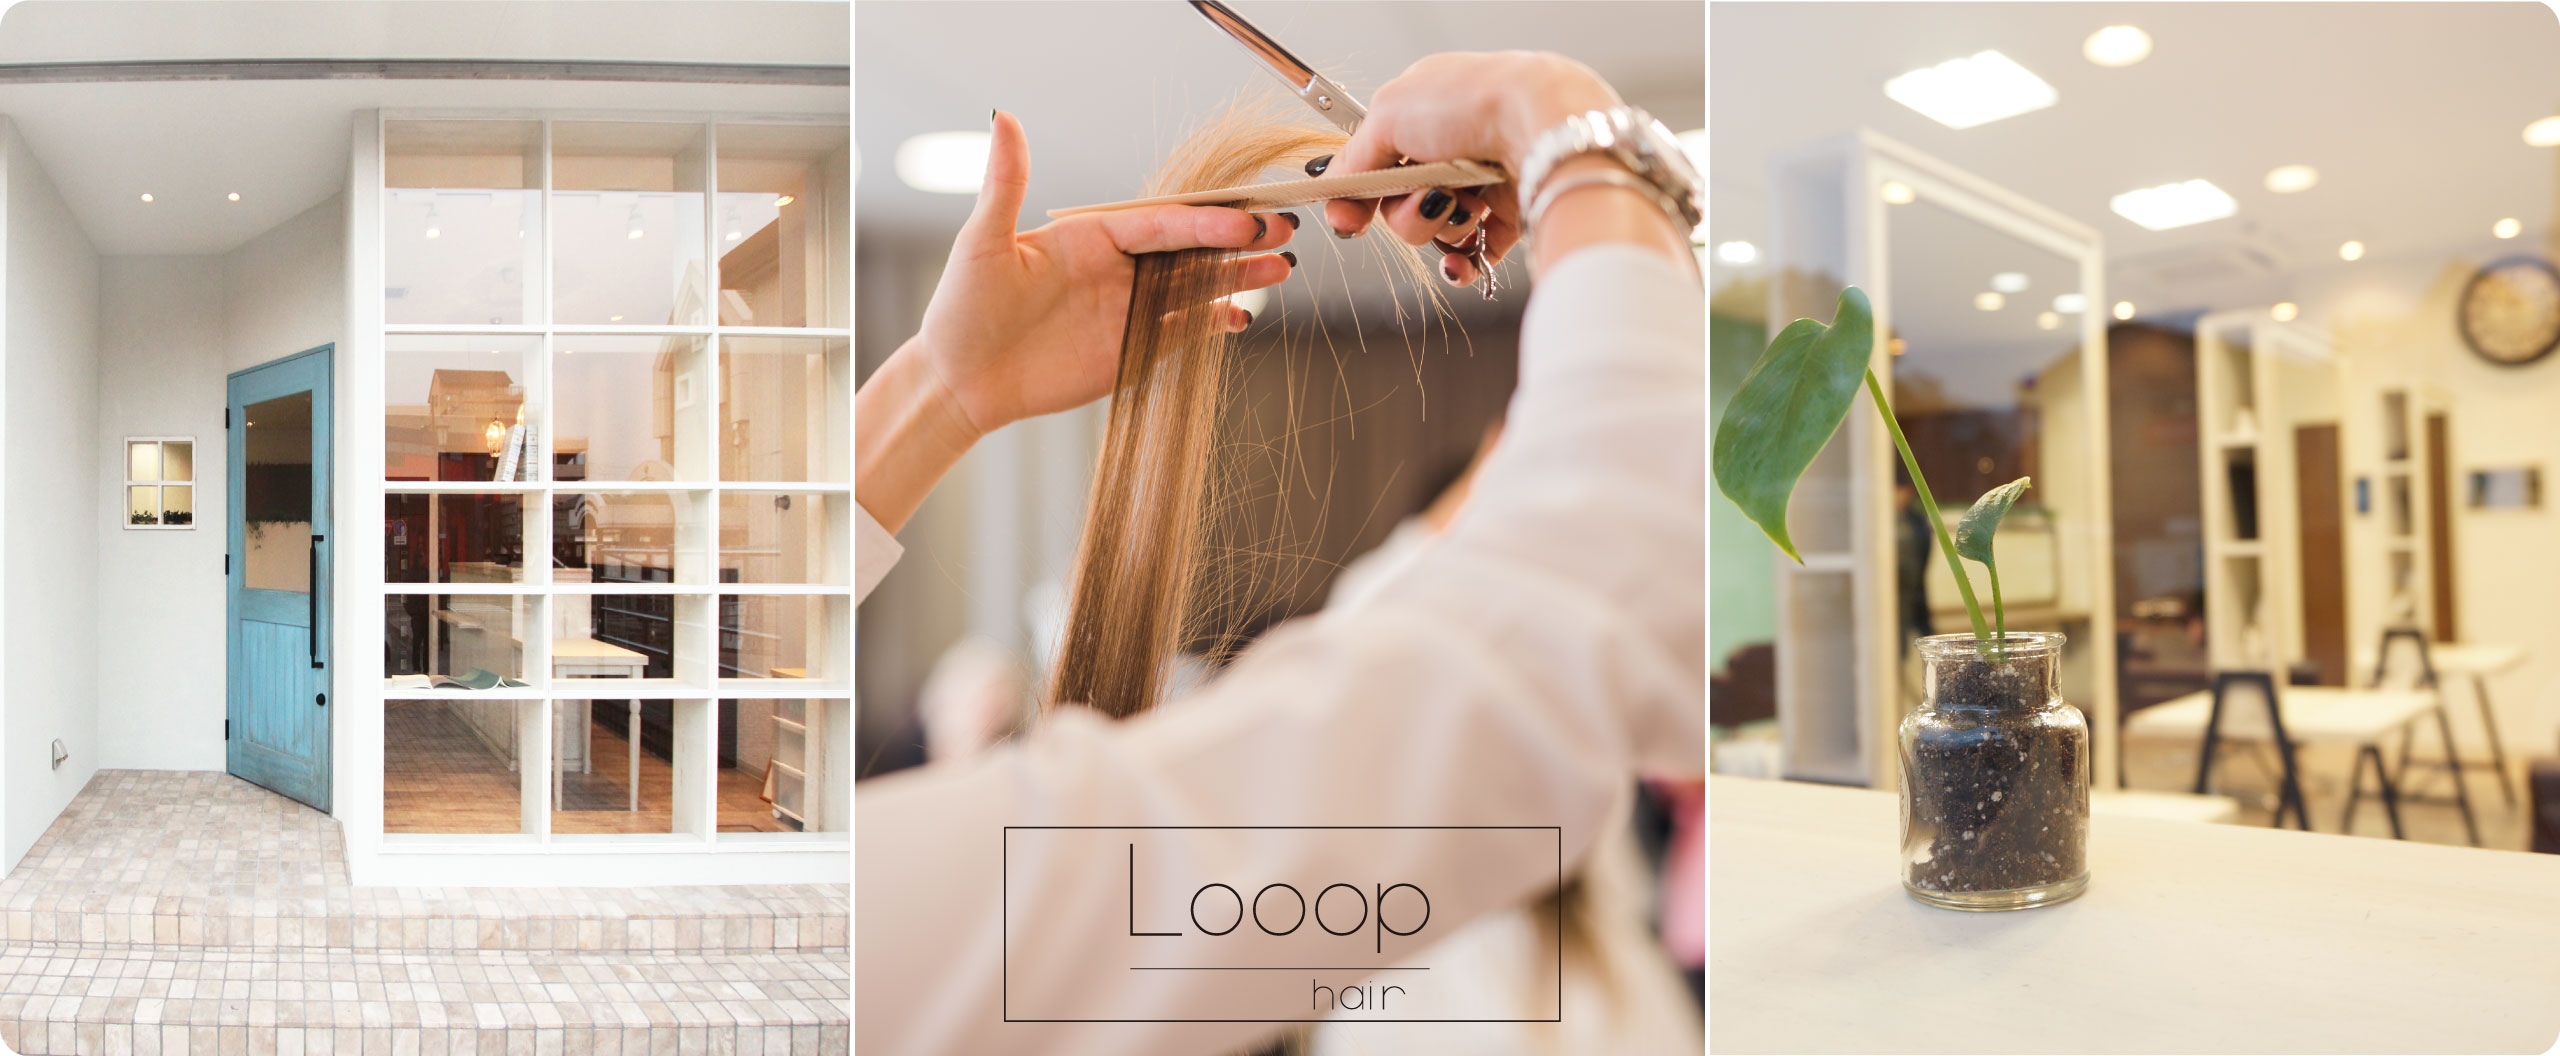 Looop hair（ループ ヘア）は、近江鉄道八日市駅の駅テナントにあり駅から徒歩１分の人気美容室です